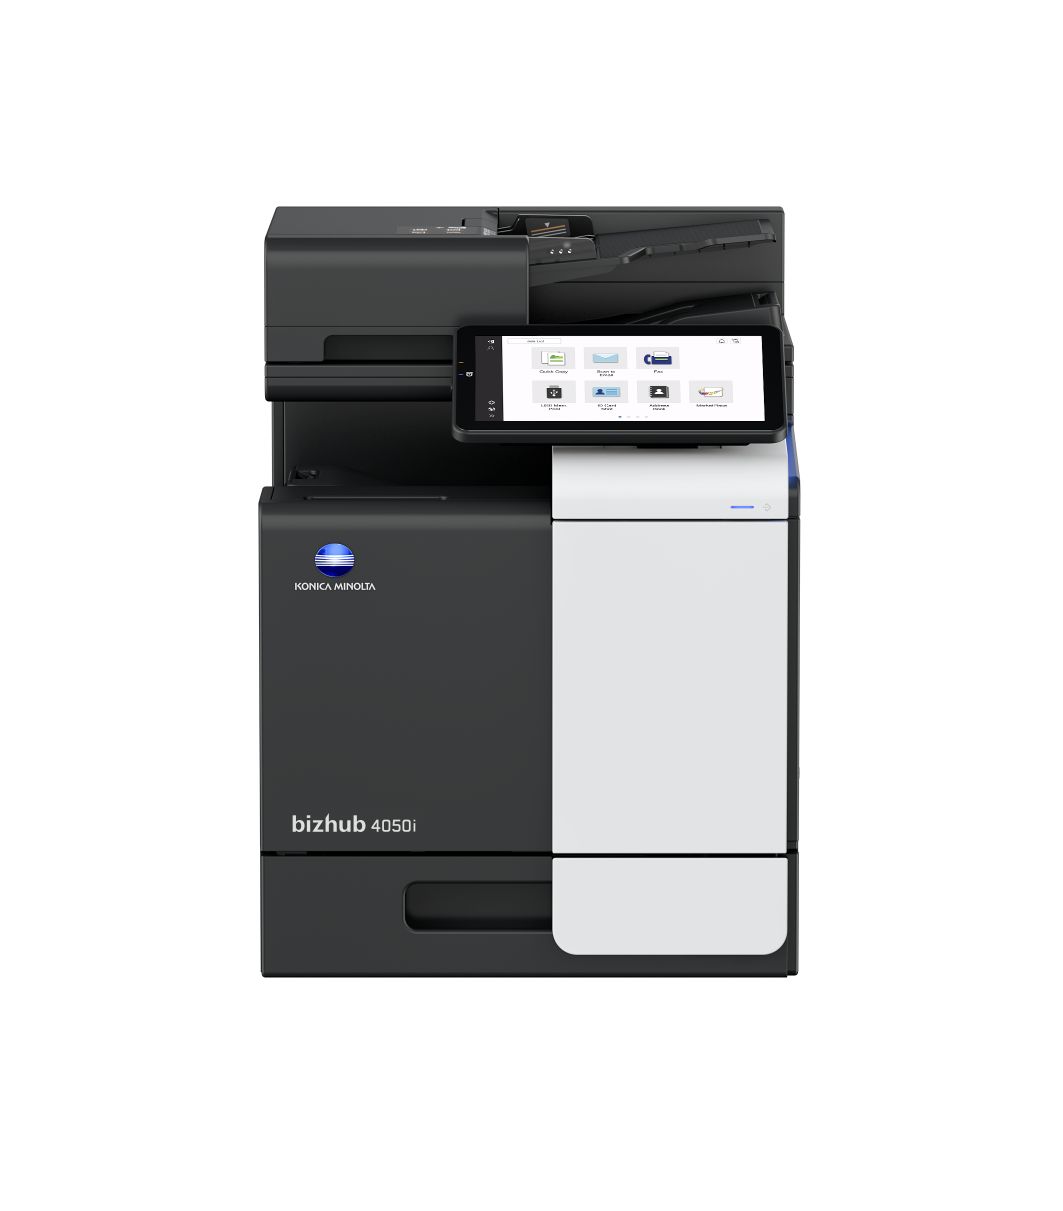 juodai baltas bizhub 4050i basic spausdintuvas baltame fone.